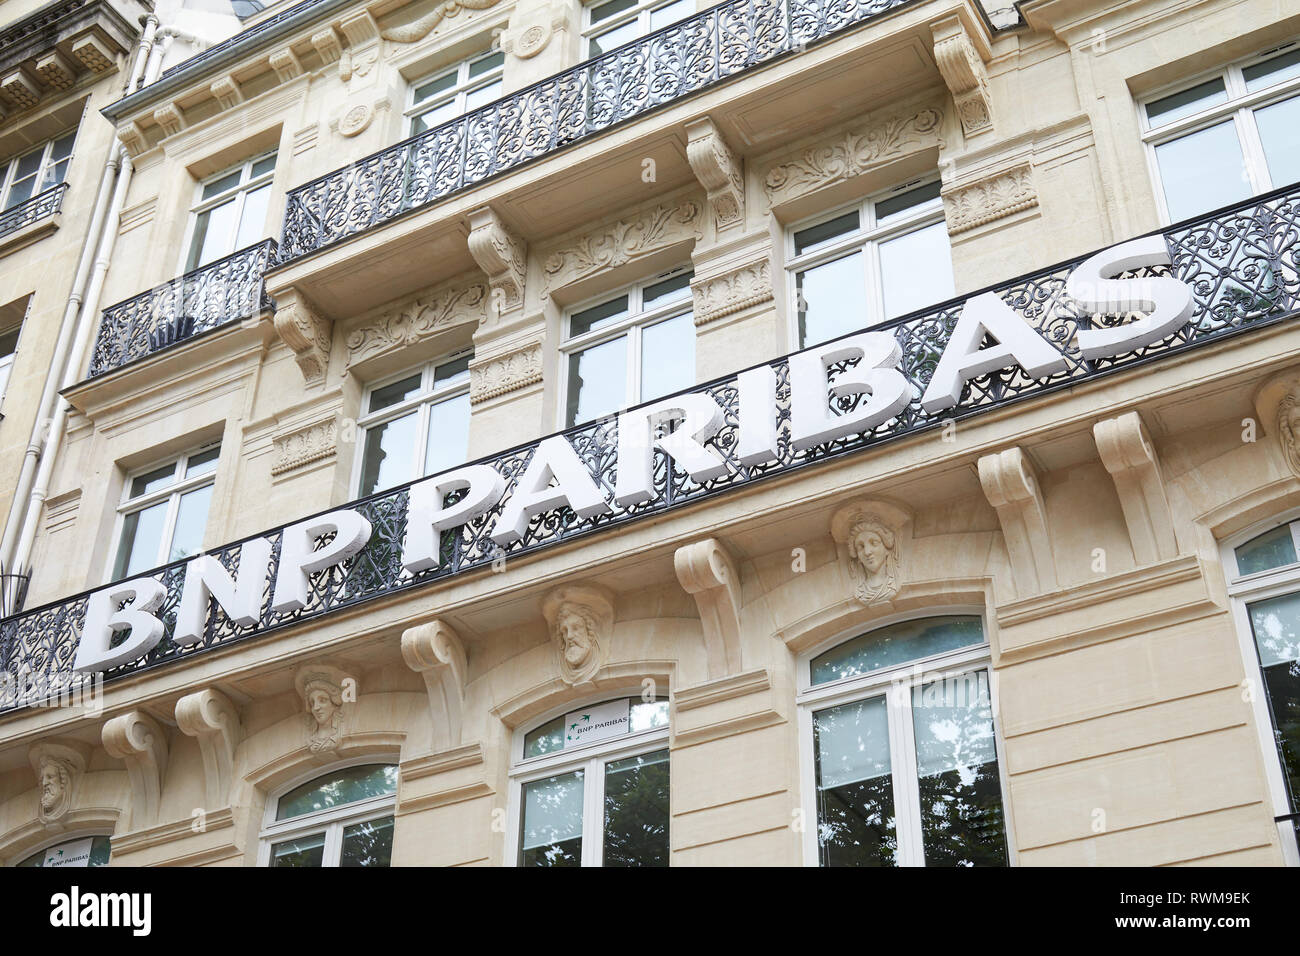 PARIS, FRANCE - JULY 22, 2017: Bnp Paribas sign on balcony in Paris, France. Stock Photo